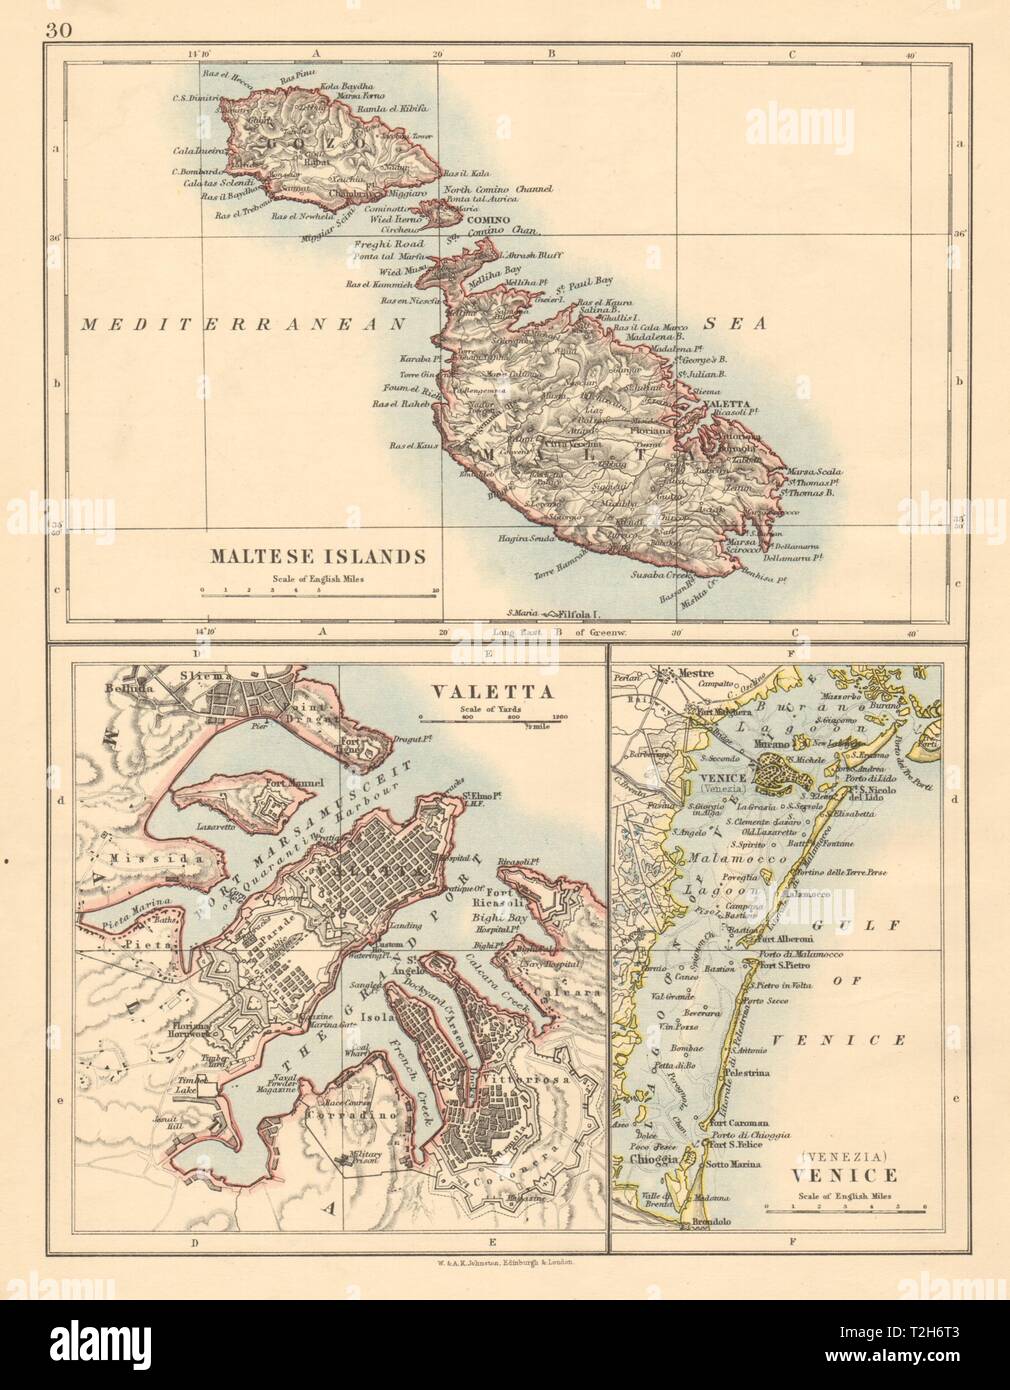 MALTESE ISLANDS Malta Gozo Valetta city town plan +Venice JOHNSTON 1892 map Stock Photo